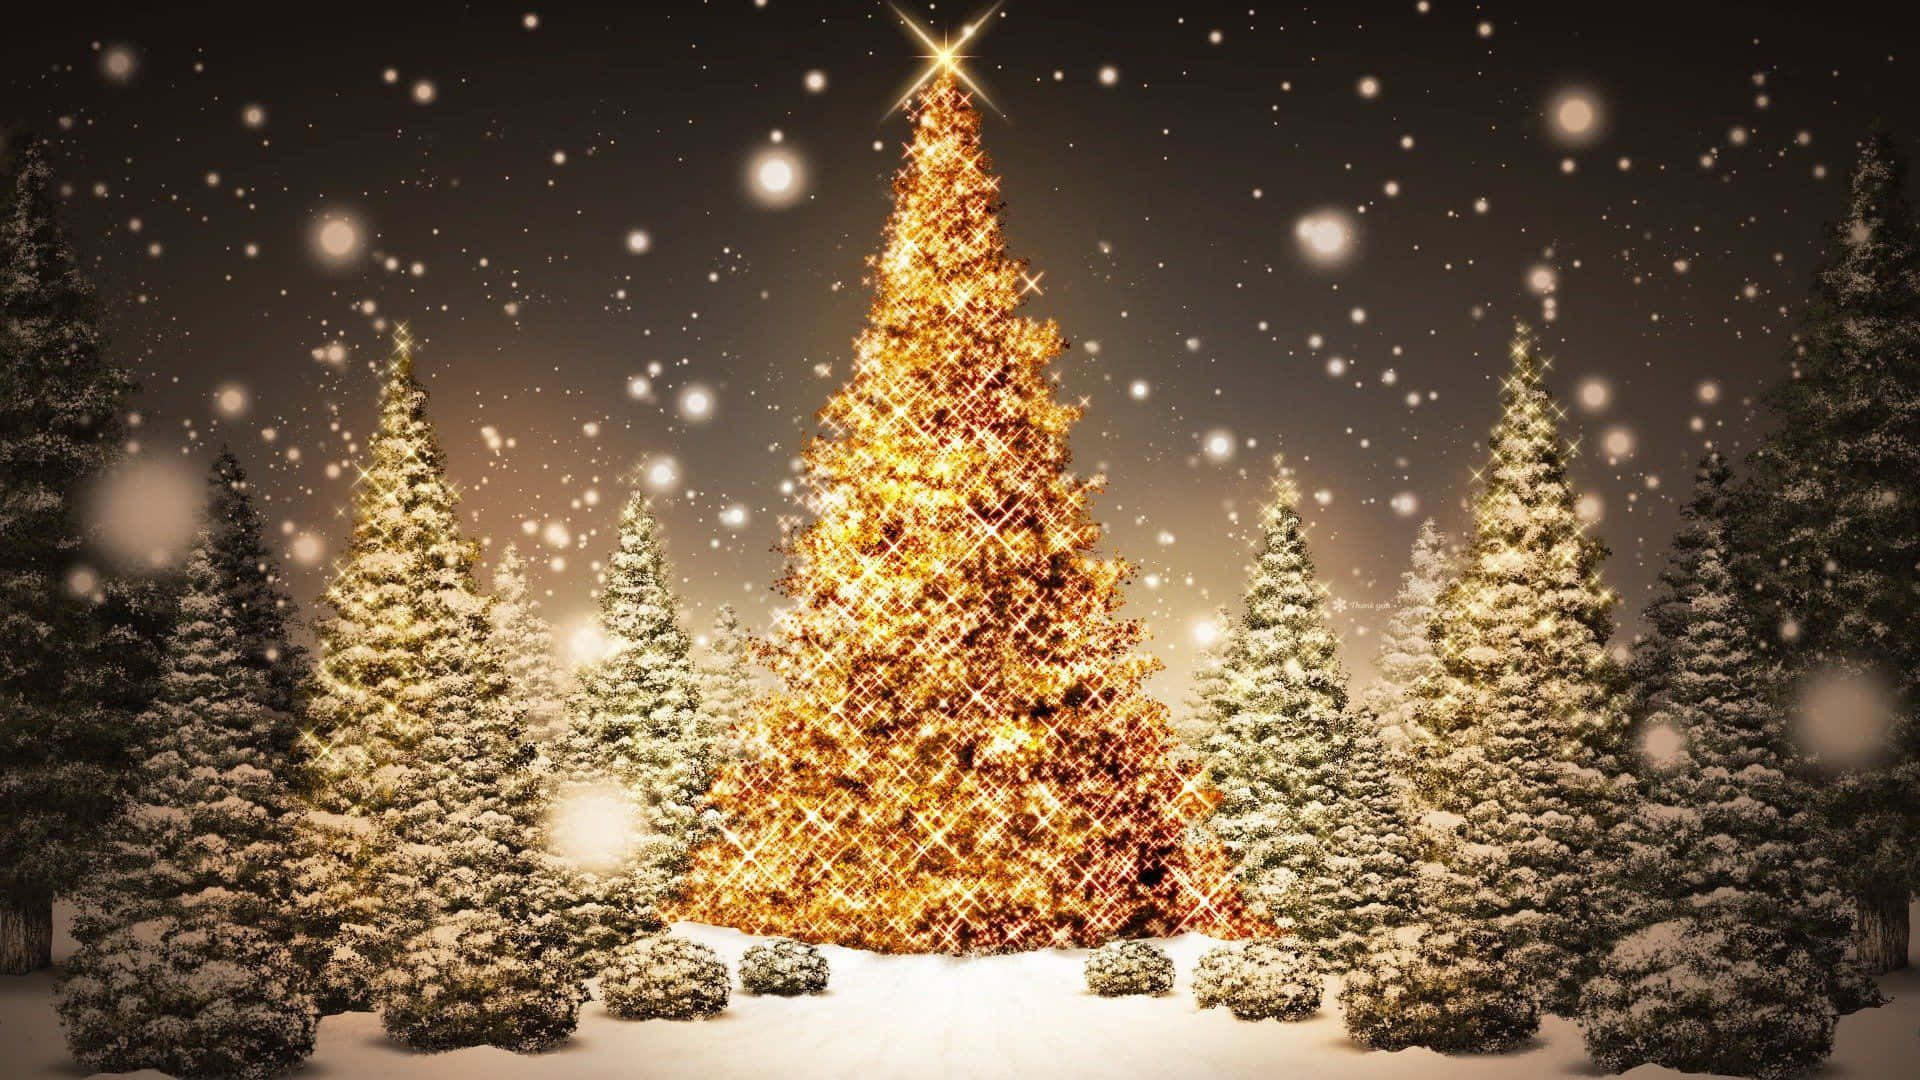 Enjoy the Festive beauty of this Aesthetic Christmas Tree! Wallpaper